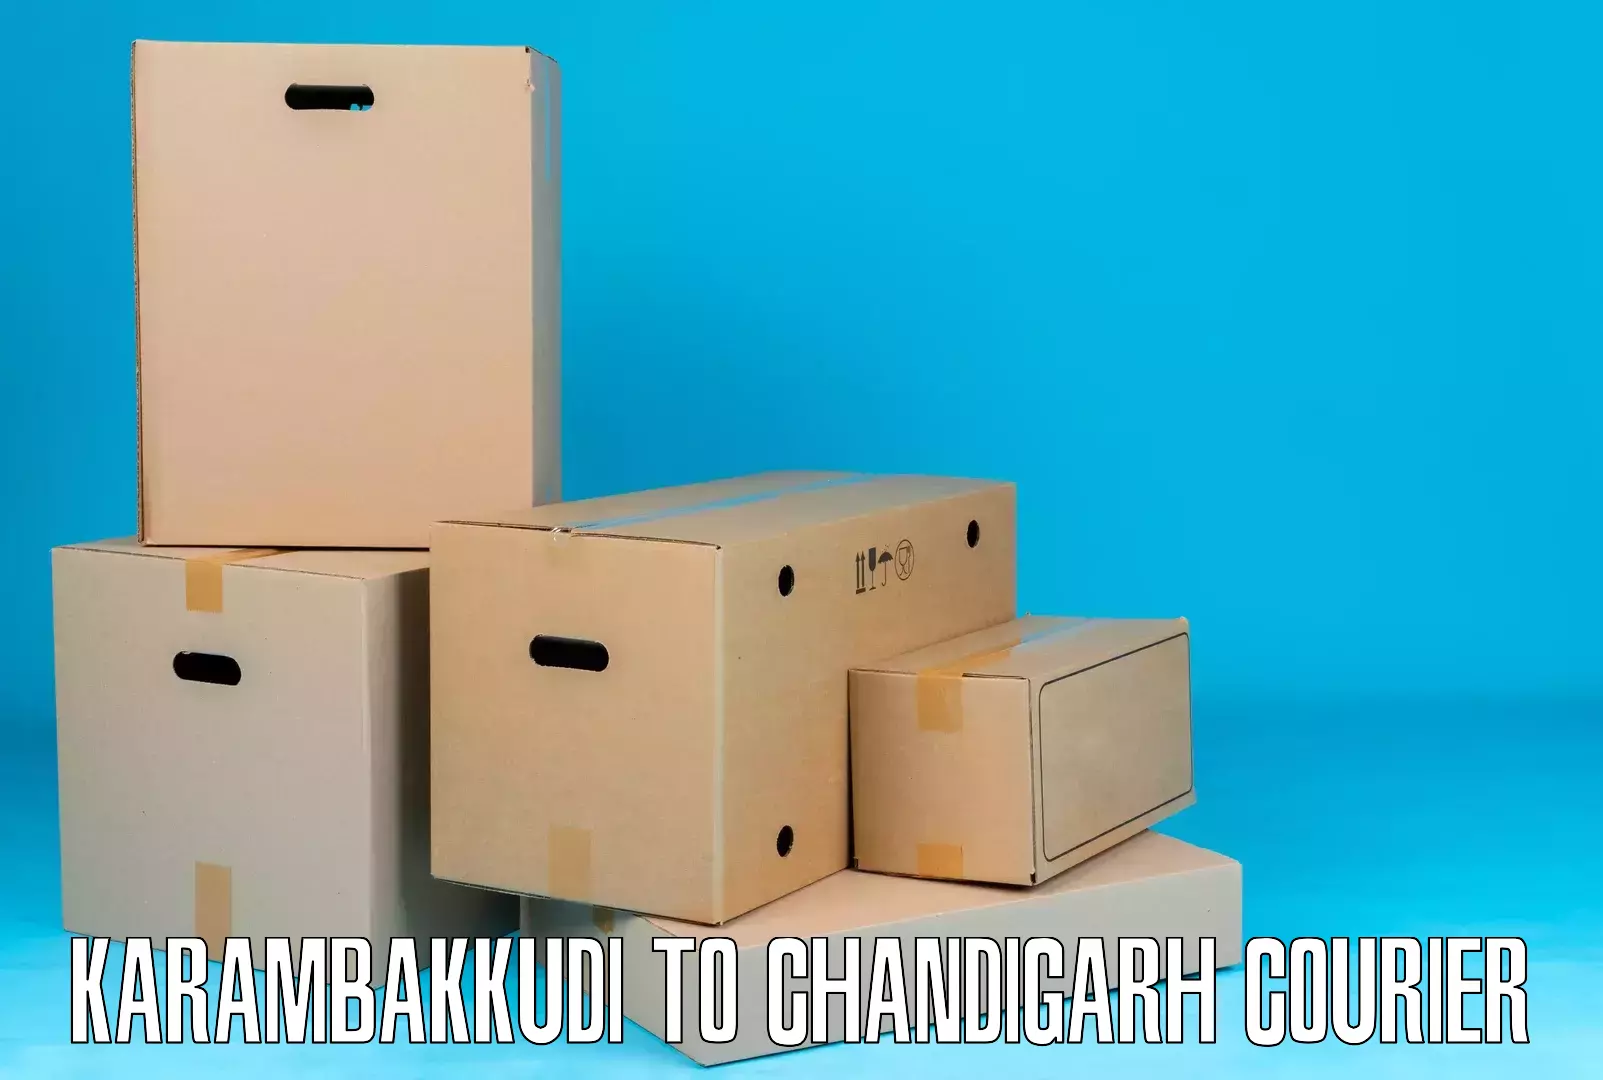 High-speed parcel service Karambakkudi to Chandigarh